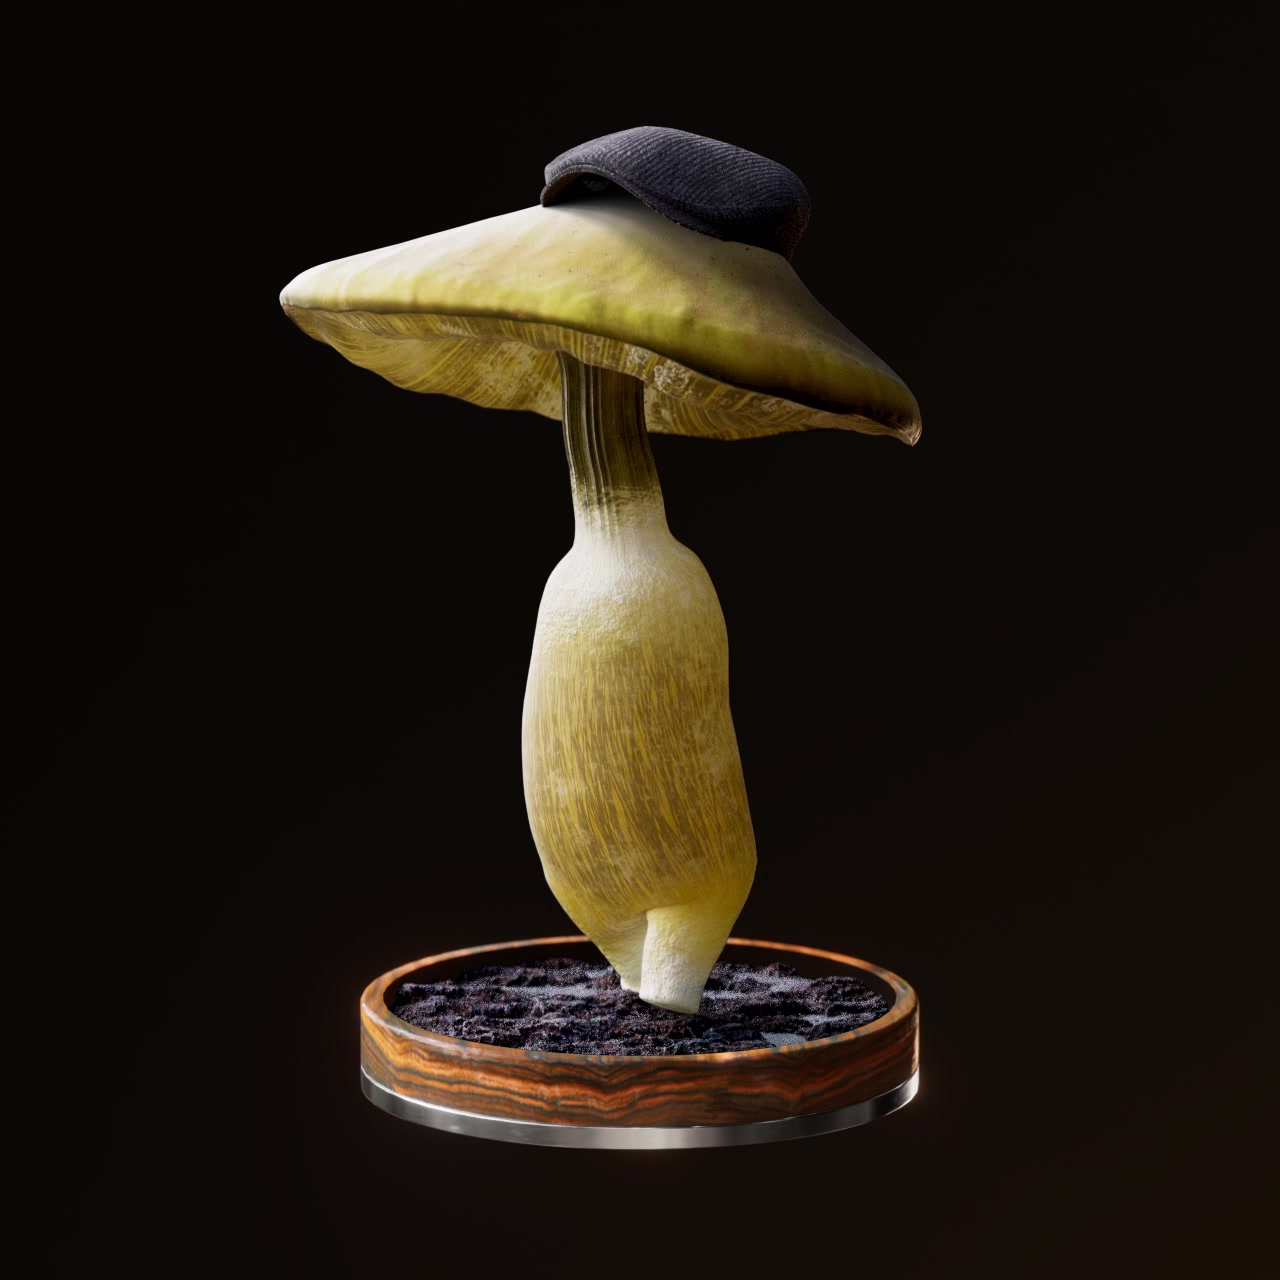 Fungi #2101